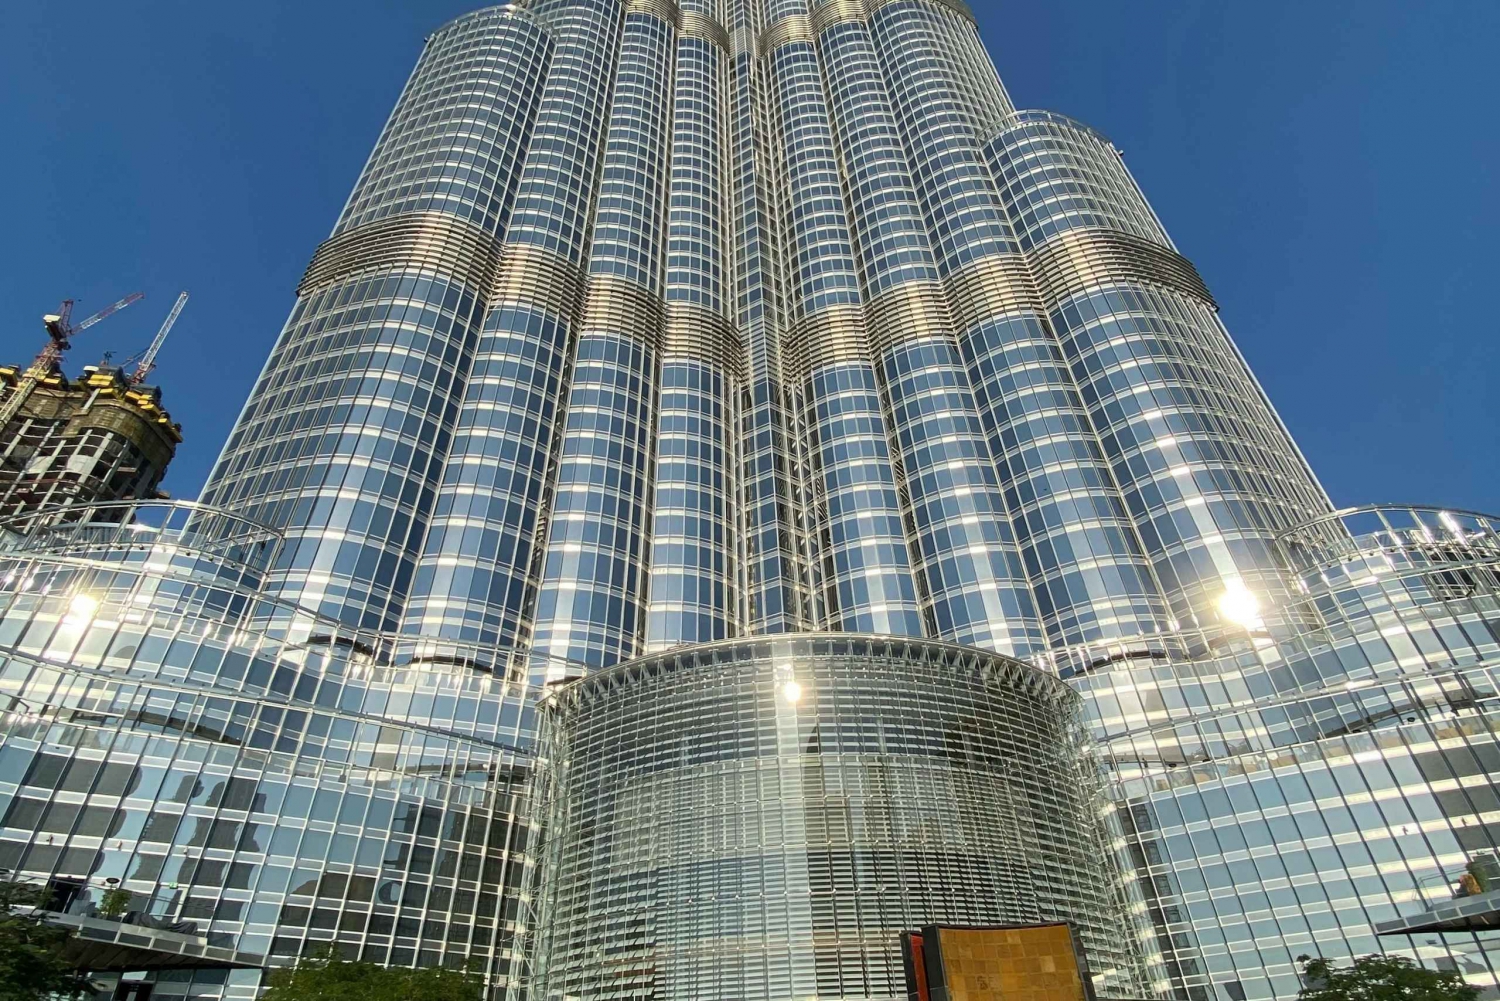 Dubai middag stadsrondleiding inclusief Burj Khalifa 124/ 125